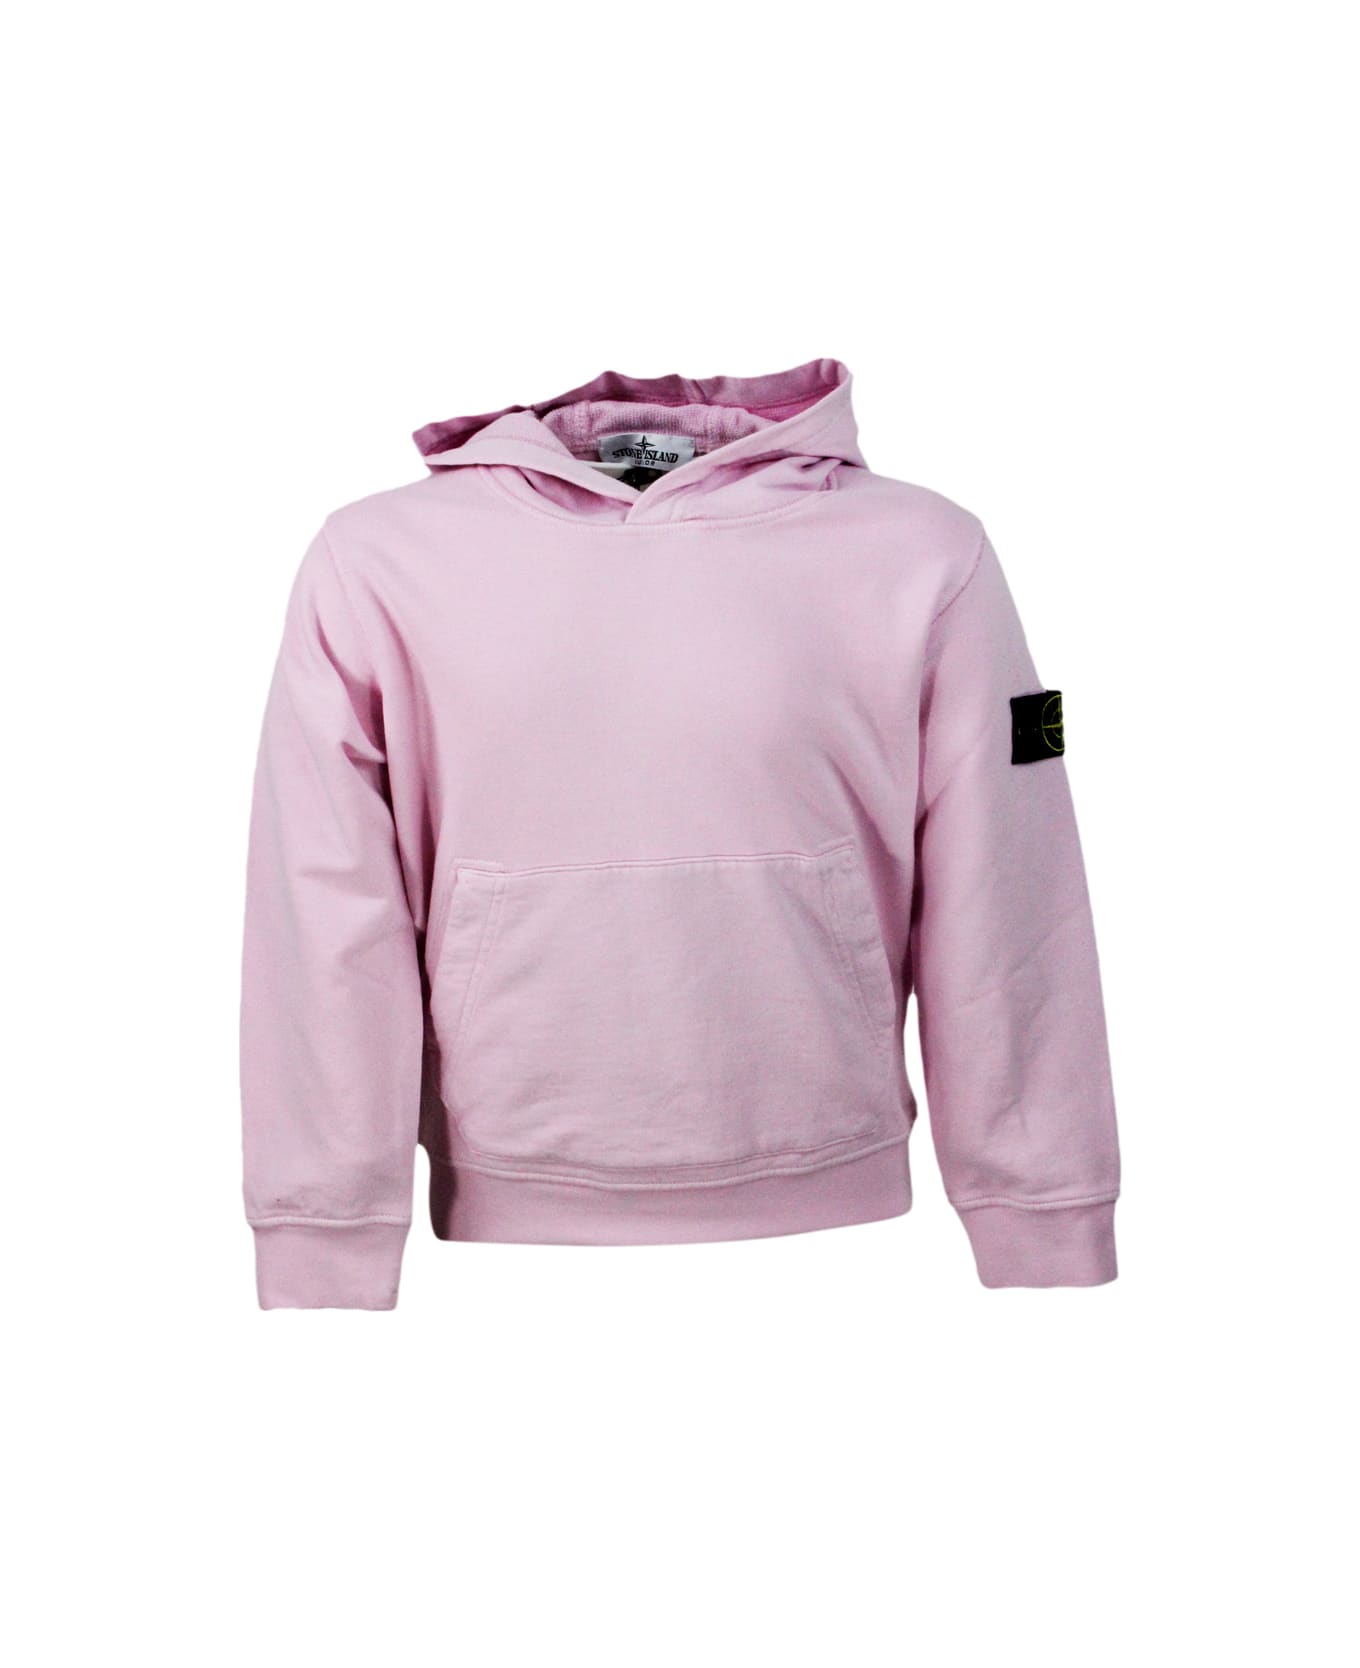 Stone Island Cotton Sweatshirt With Hood, Kangaroo Pockets And Logo On The Sleeve - Pink